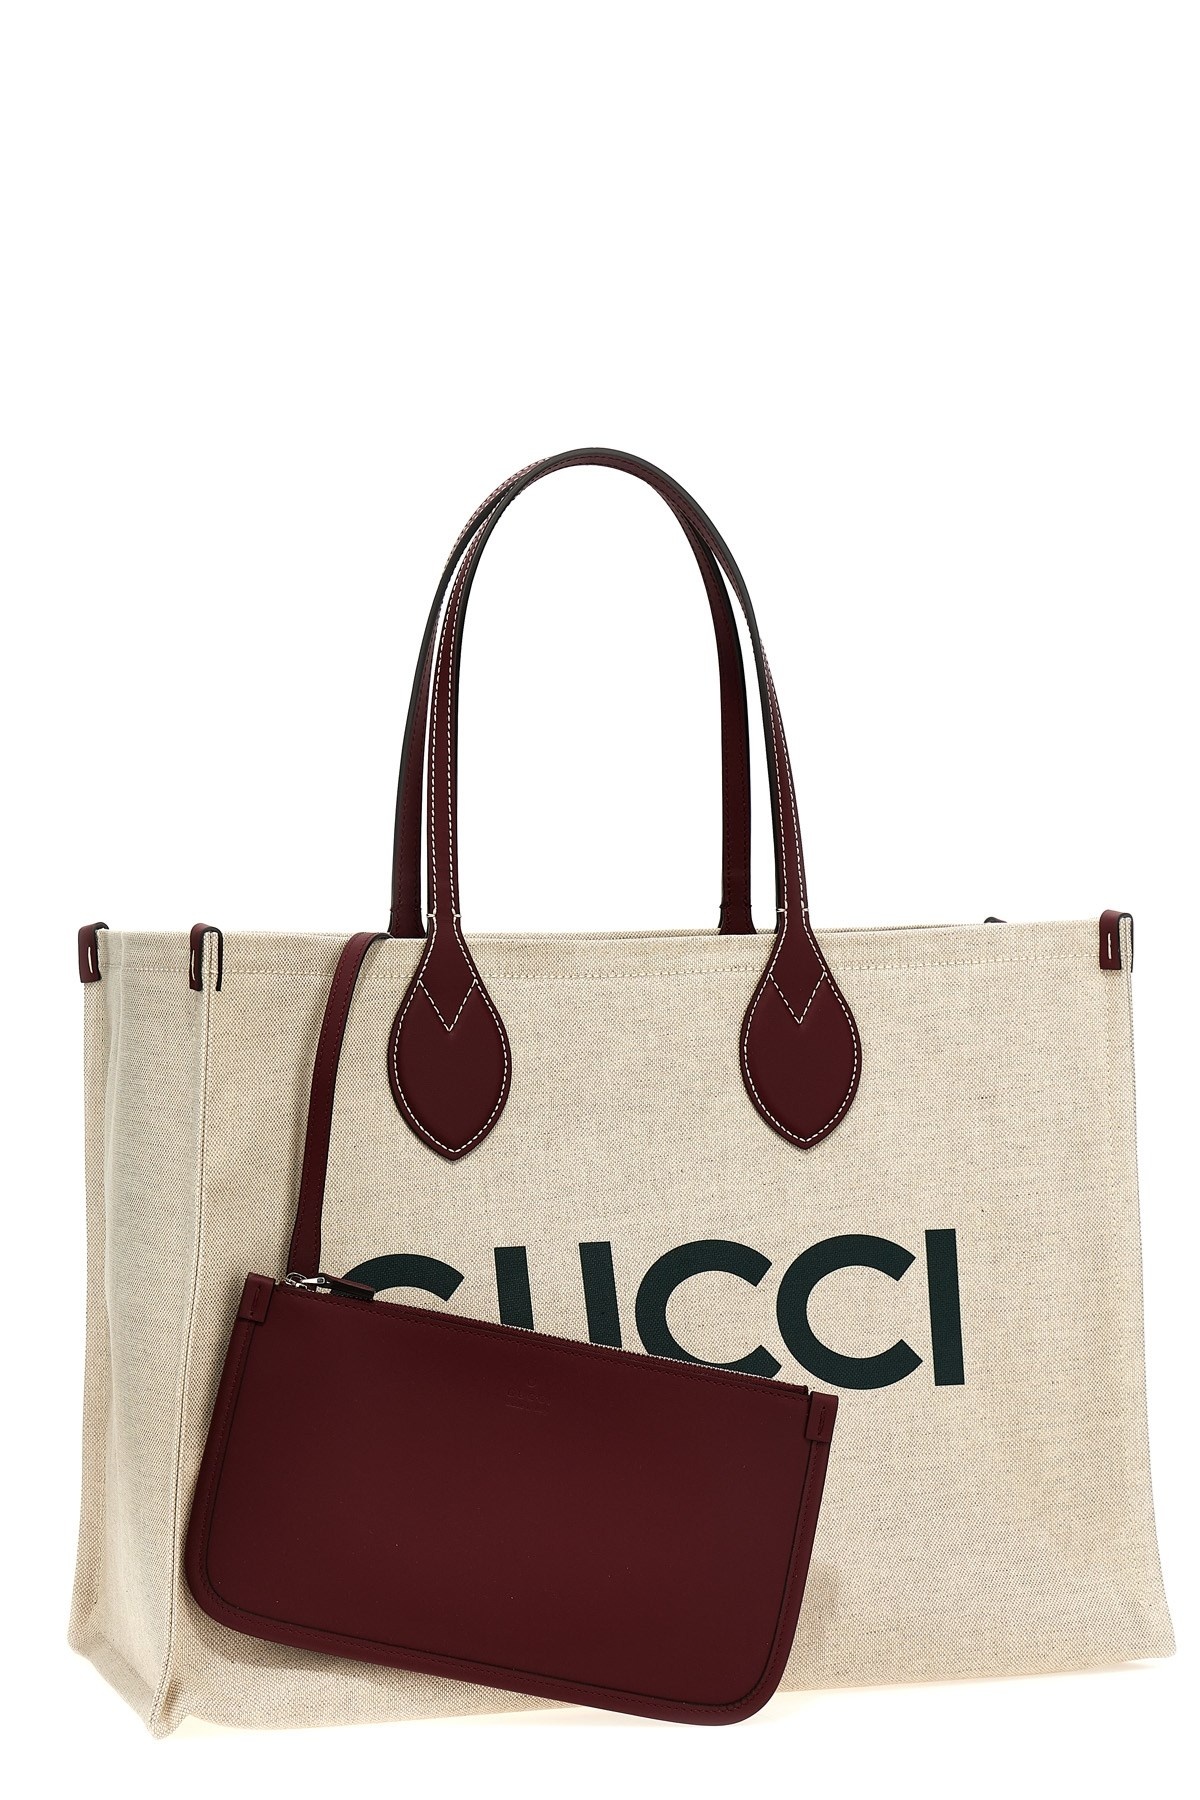 'Gucci' shopping bag - 4